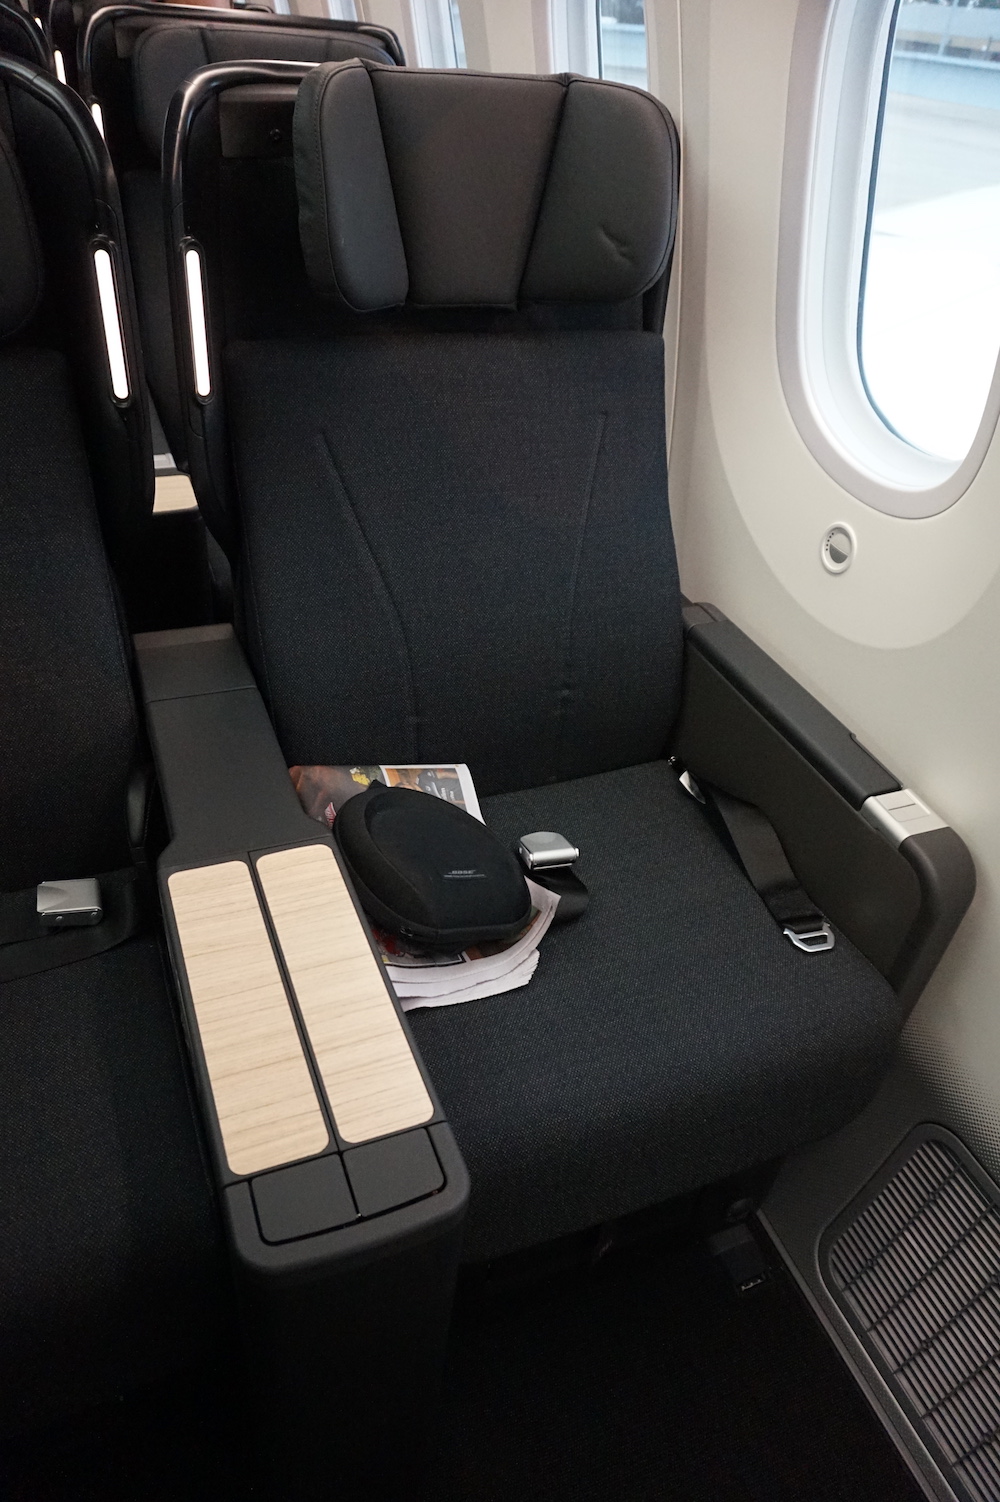 Qantas 787 Business Class seat